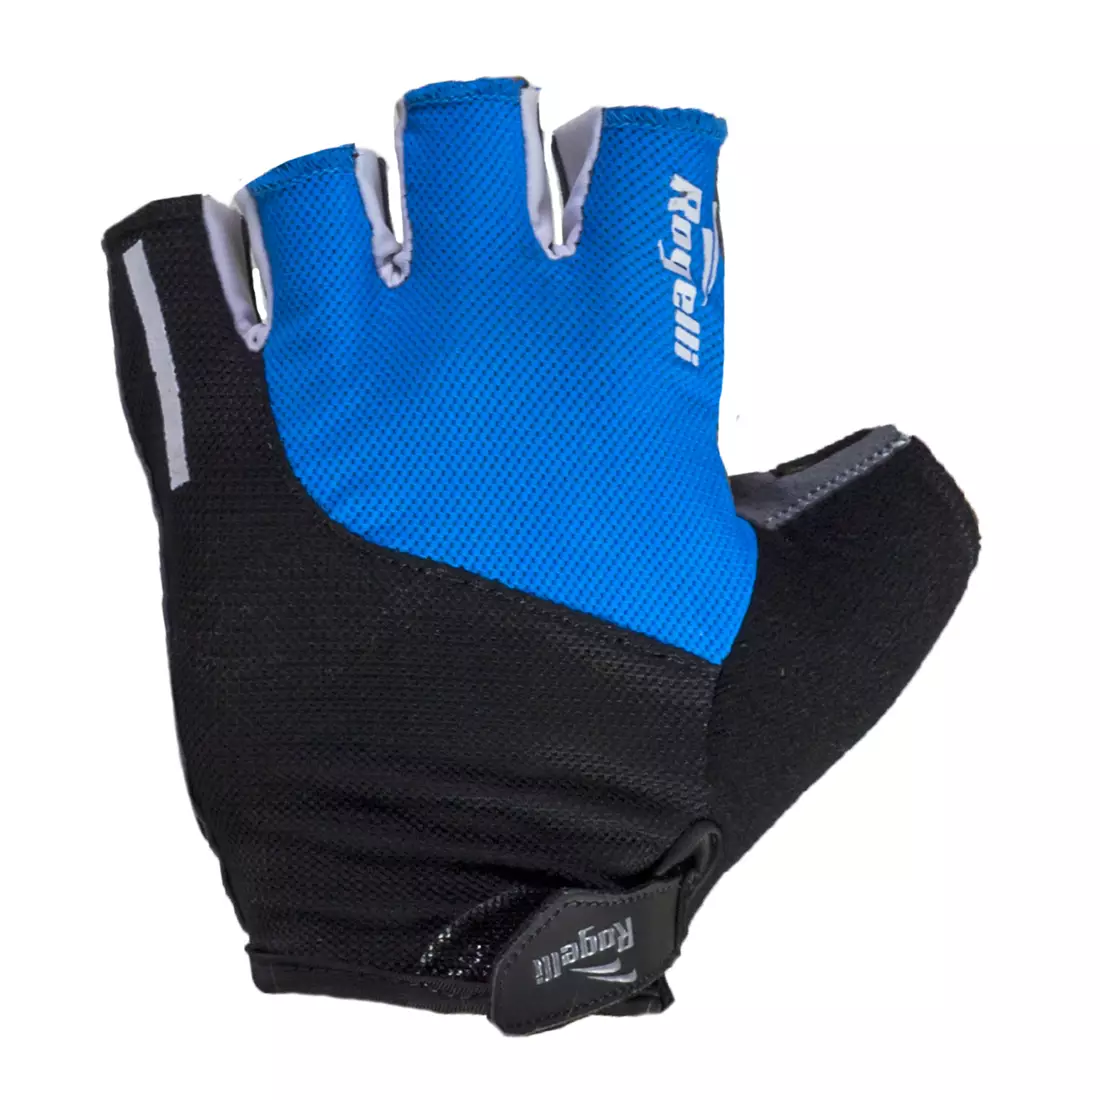 ROGELLI BIKE ROCKFORD men's cycling gloves 006.339, blue